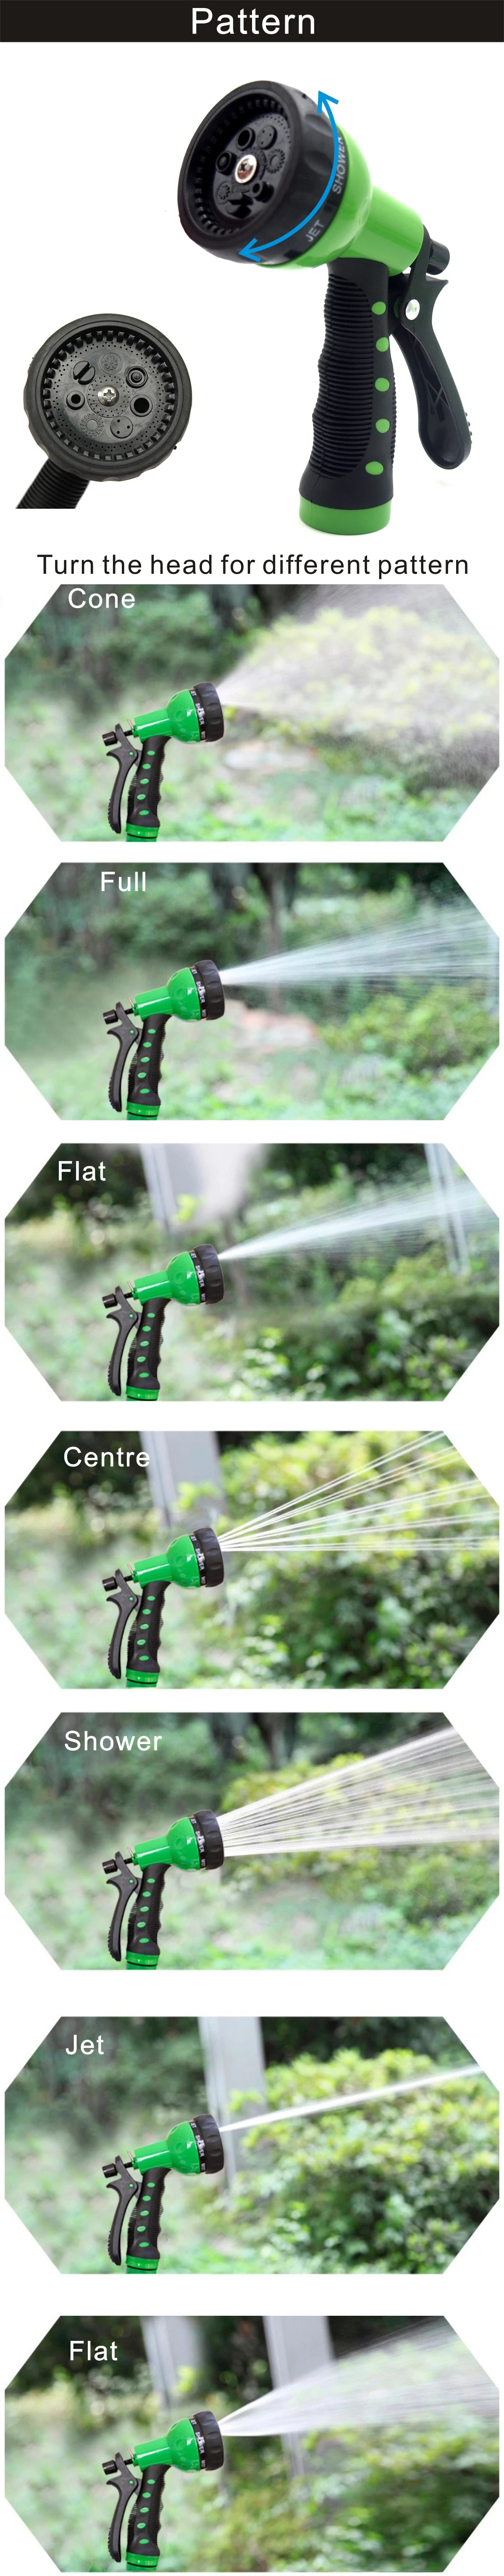 Plastic 7 function water spray gun for garden